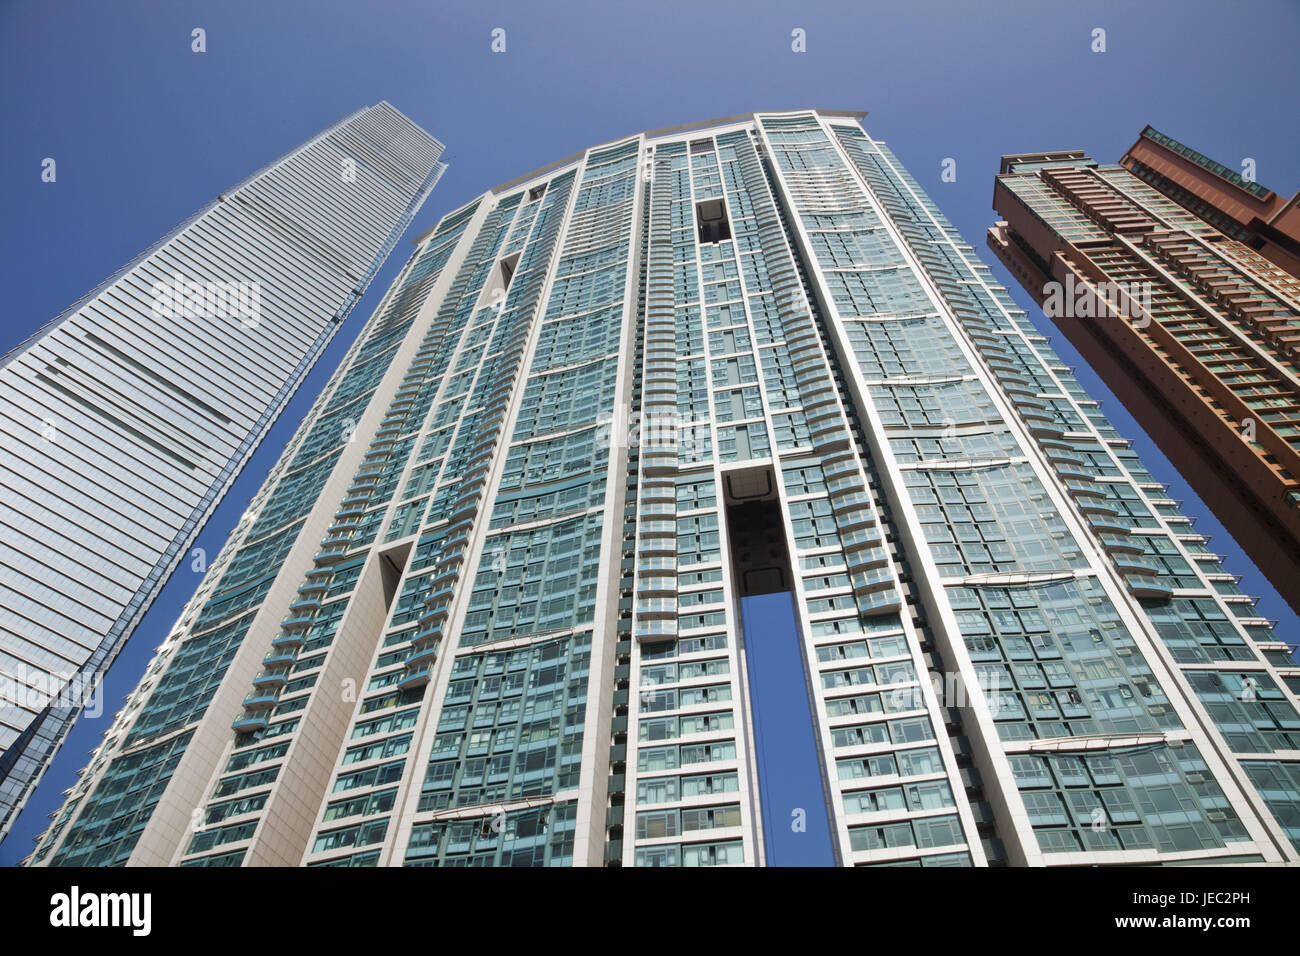 Cina, Hong Kong, West-Kowloon, alta sorge e internazionale centro commerciale, Foto Stock